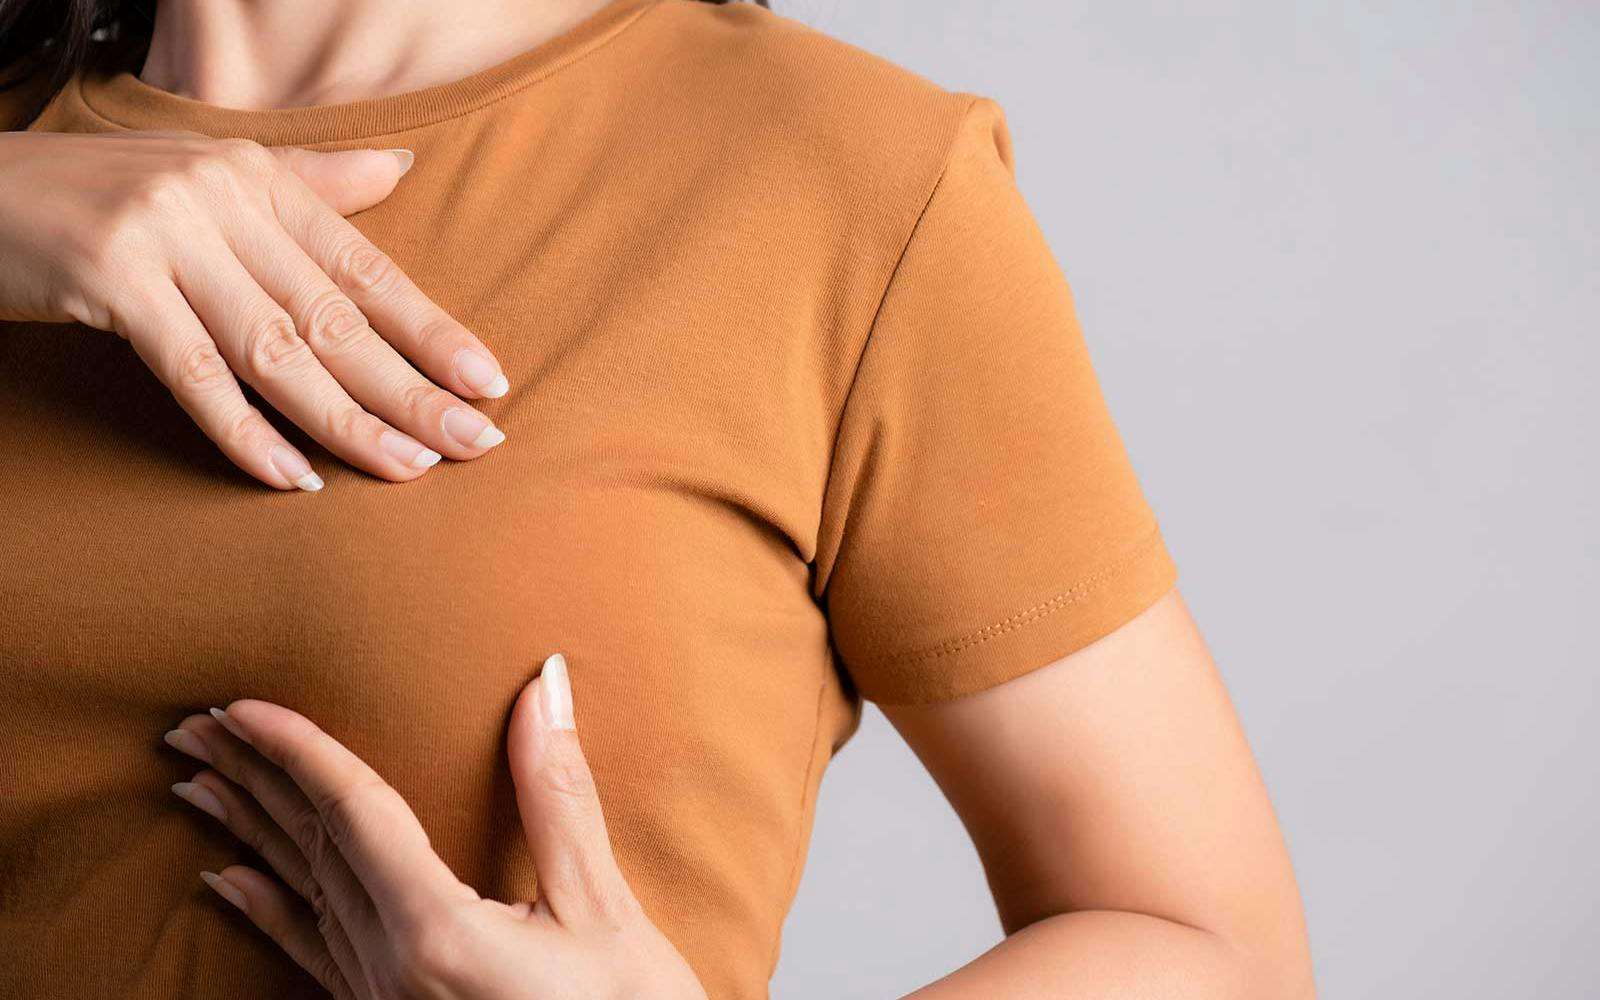 Autopalpation mammaire : comment auto-examiner ses seins ...